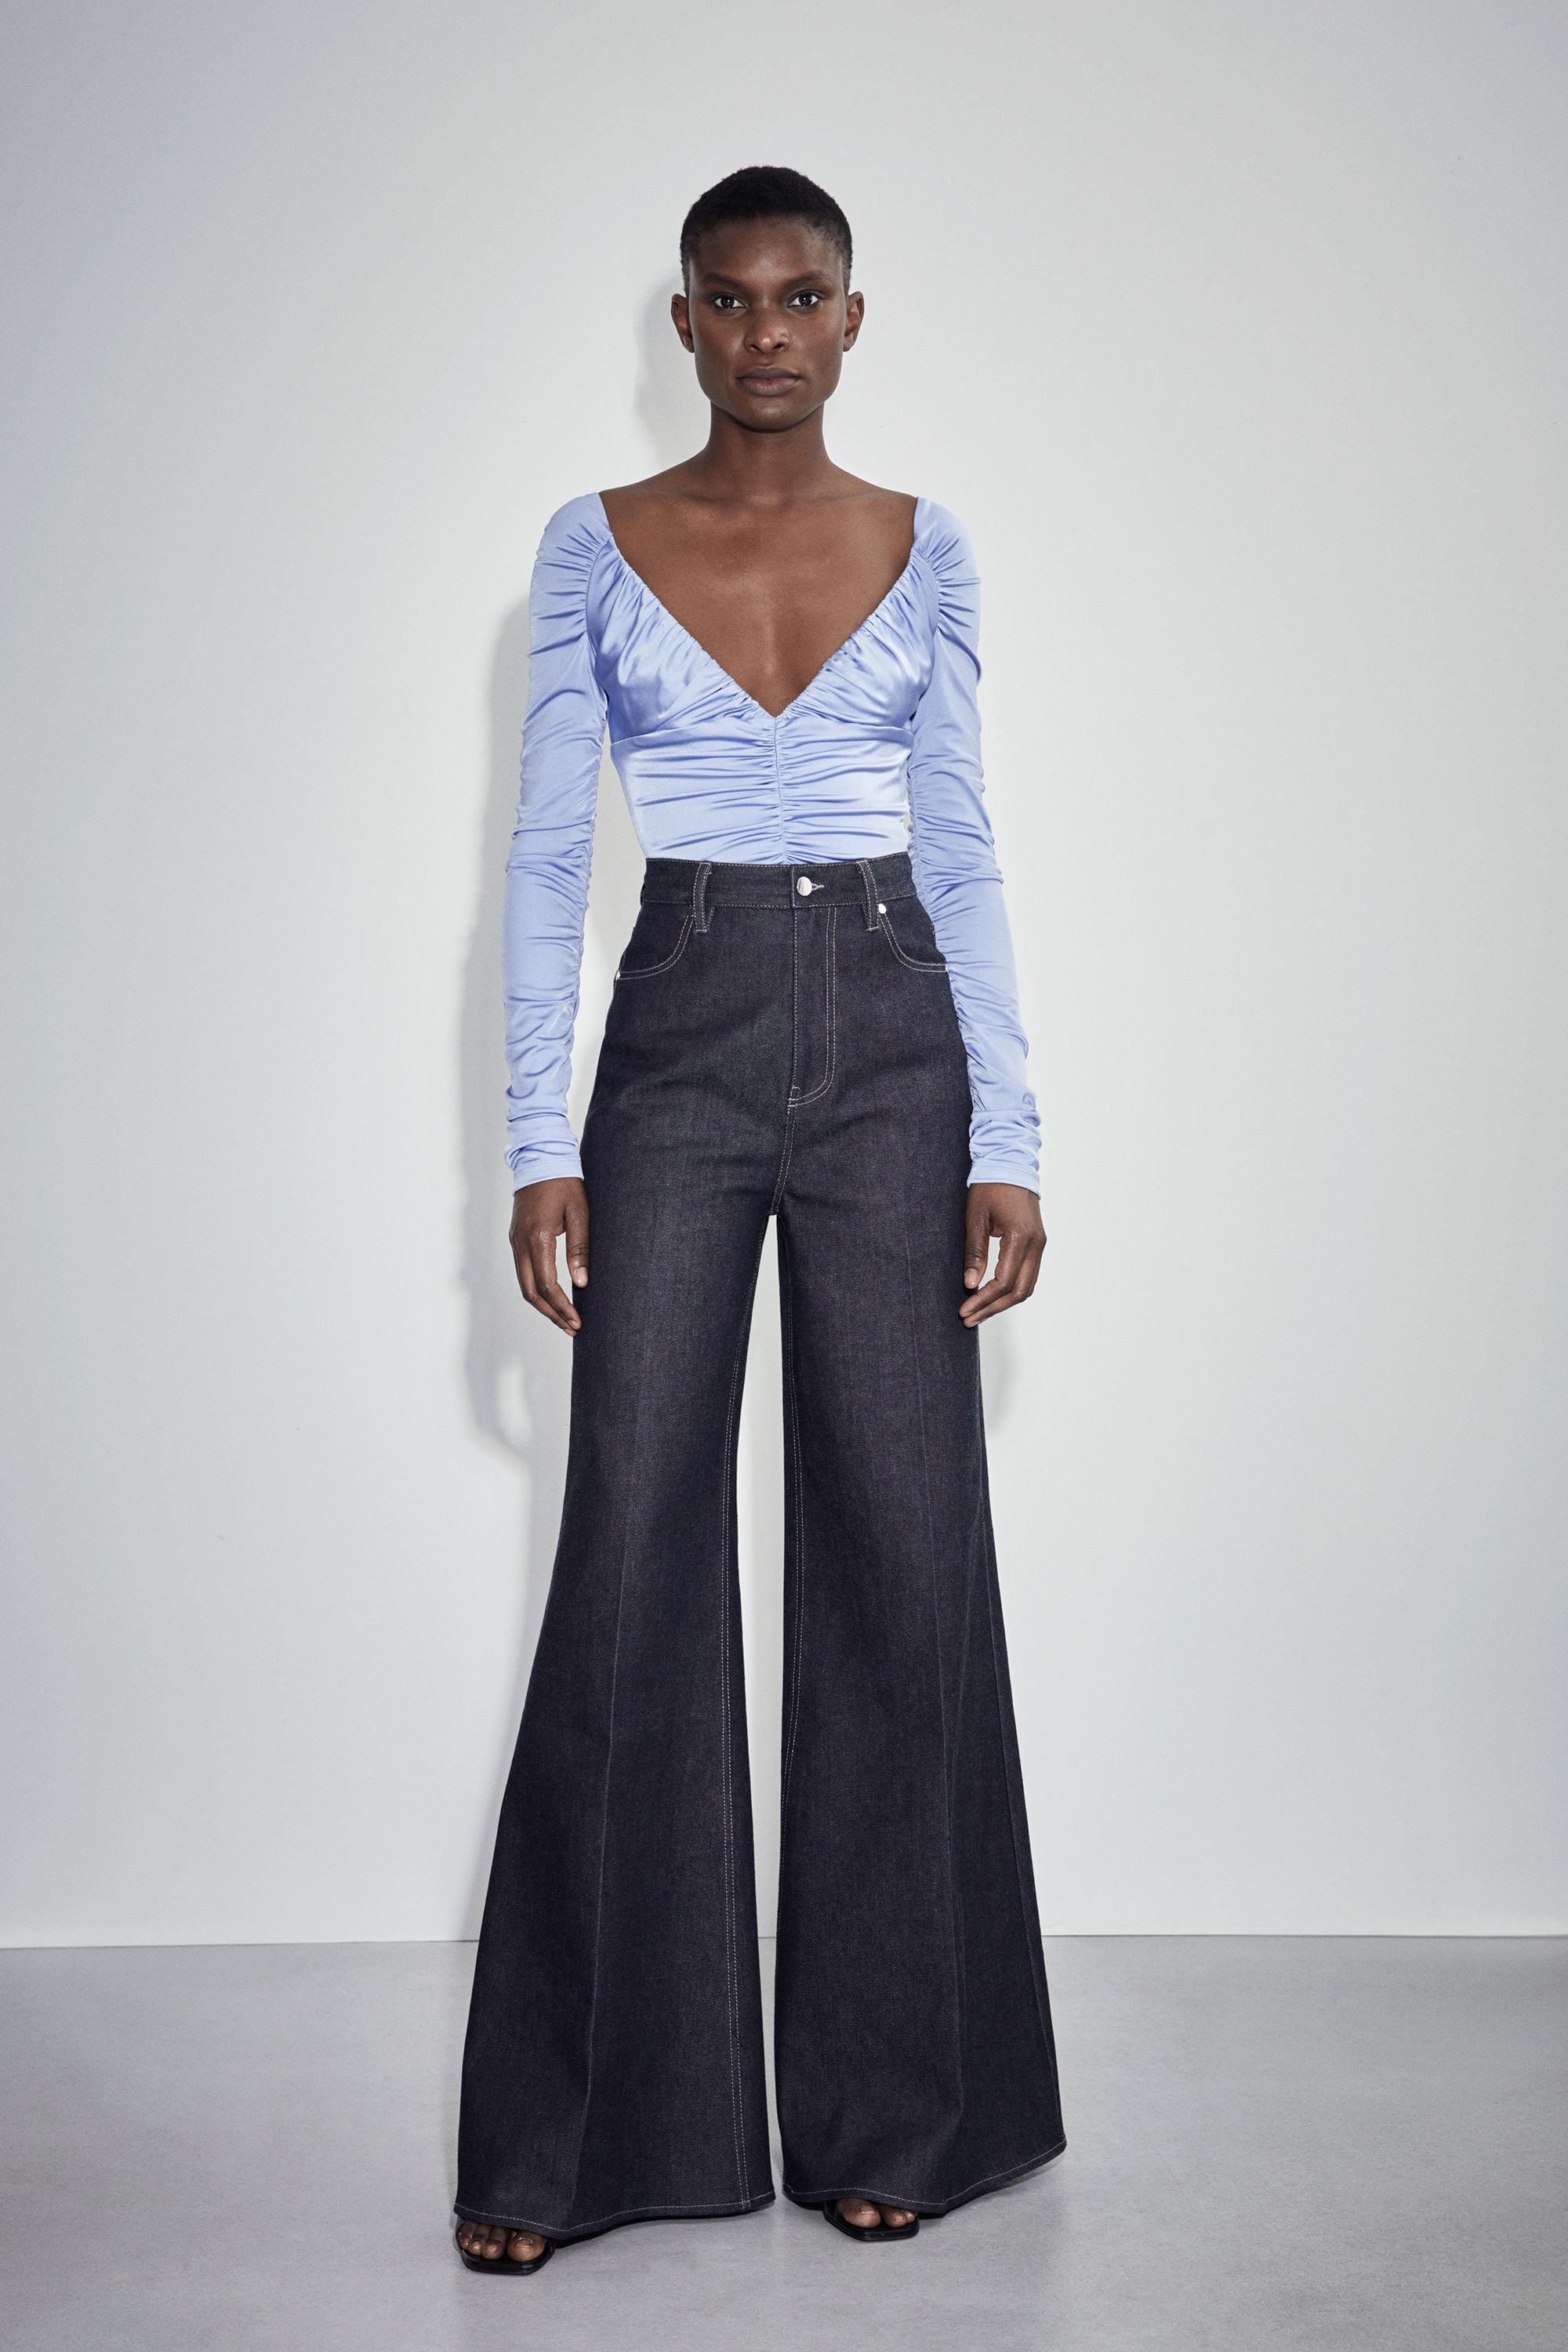 J Embraces '70s Style in Flared Dark Denim Jeans Fashion